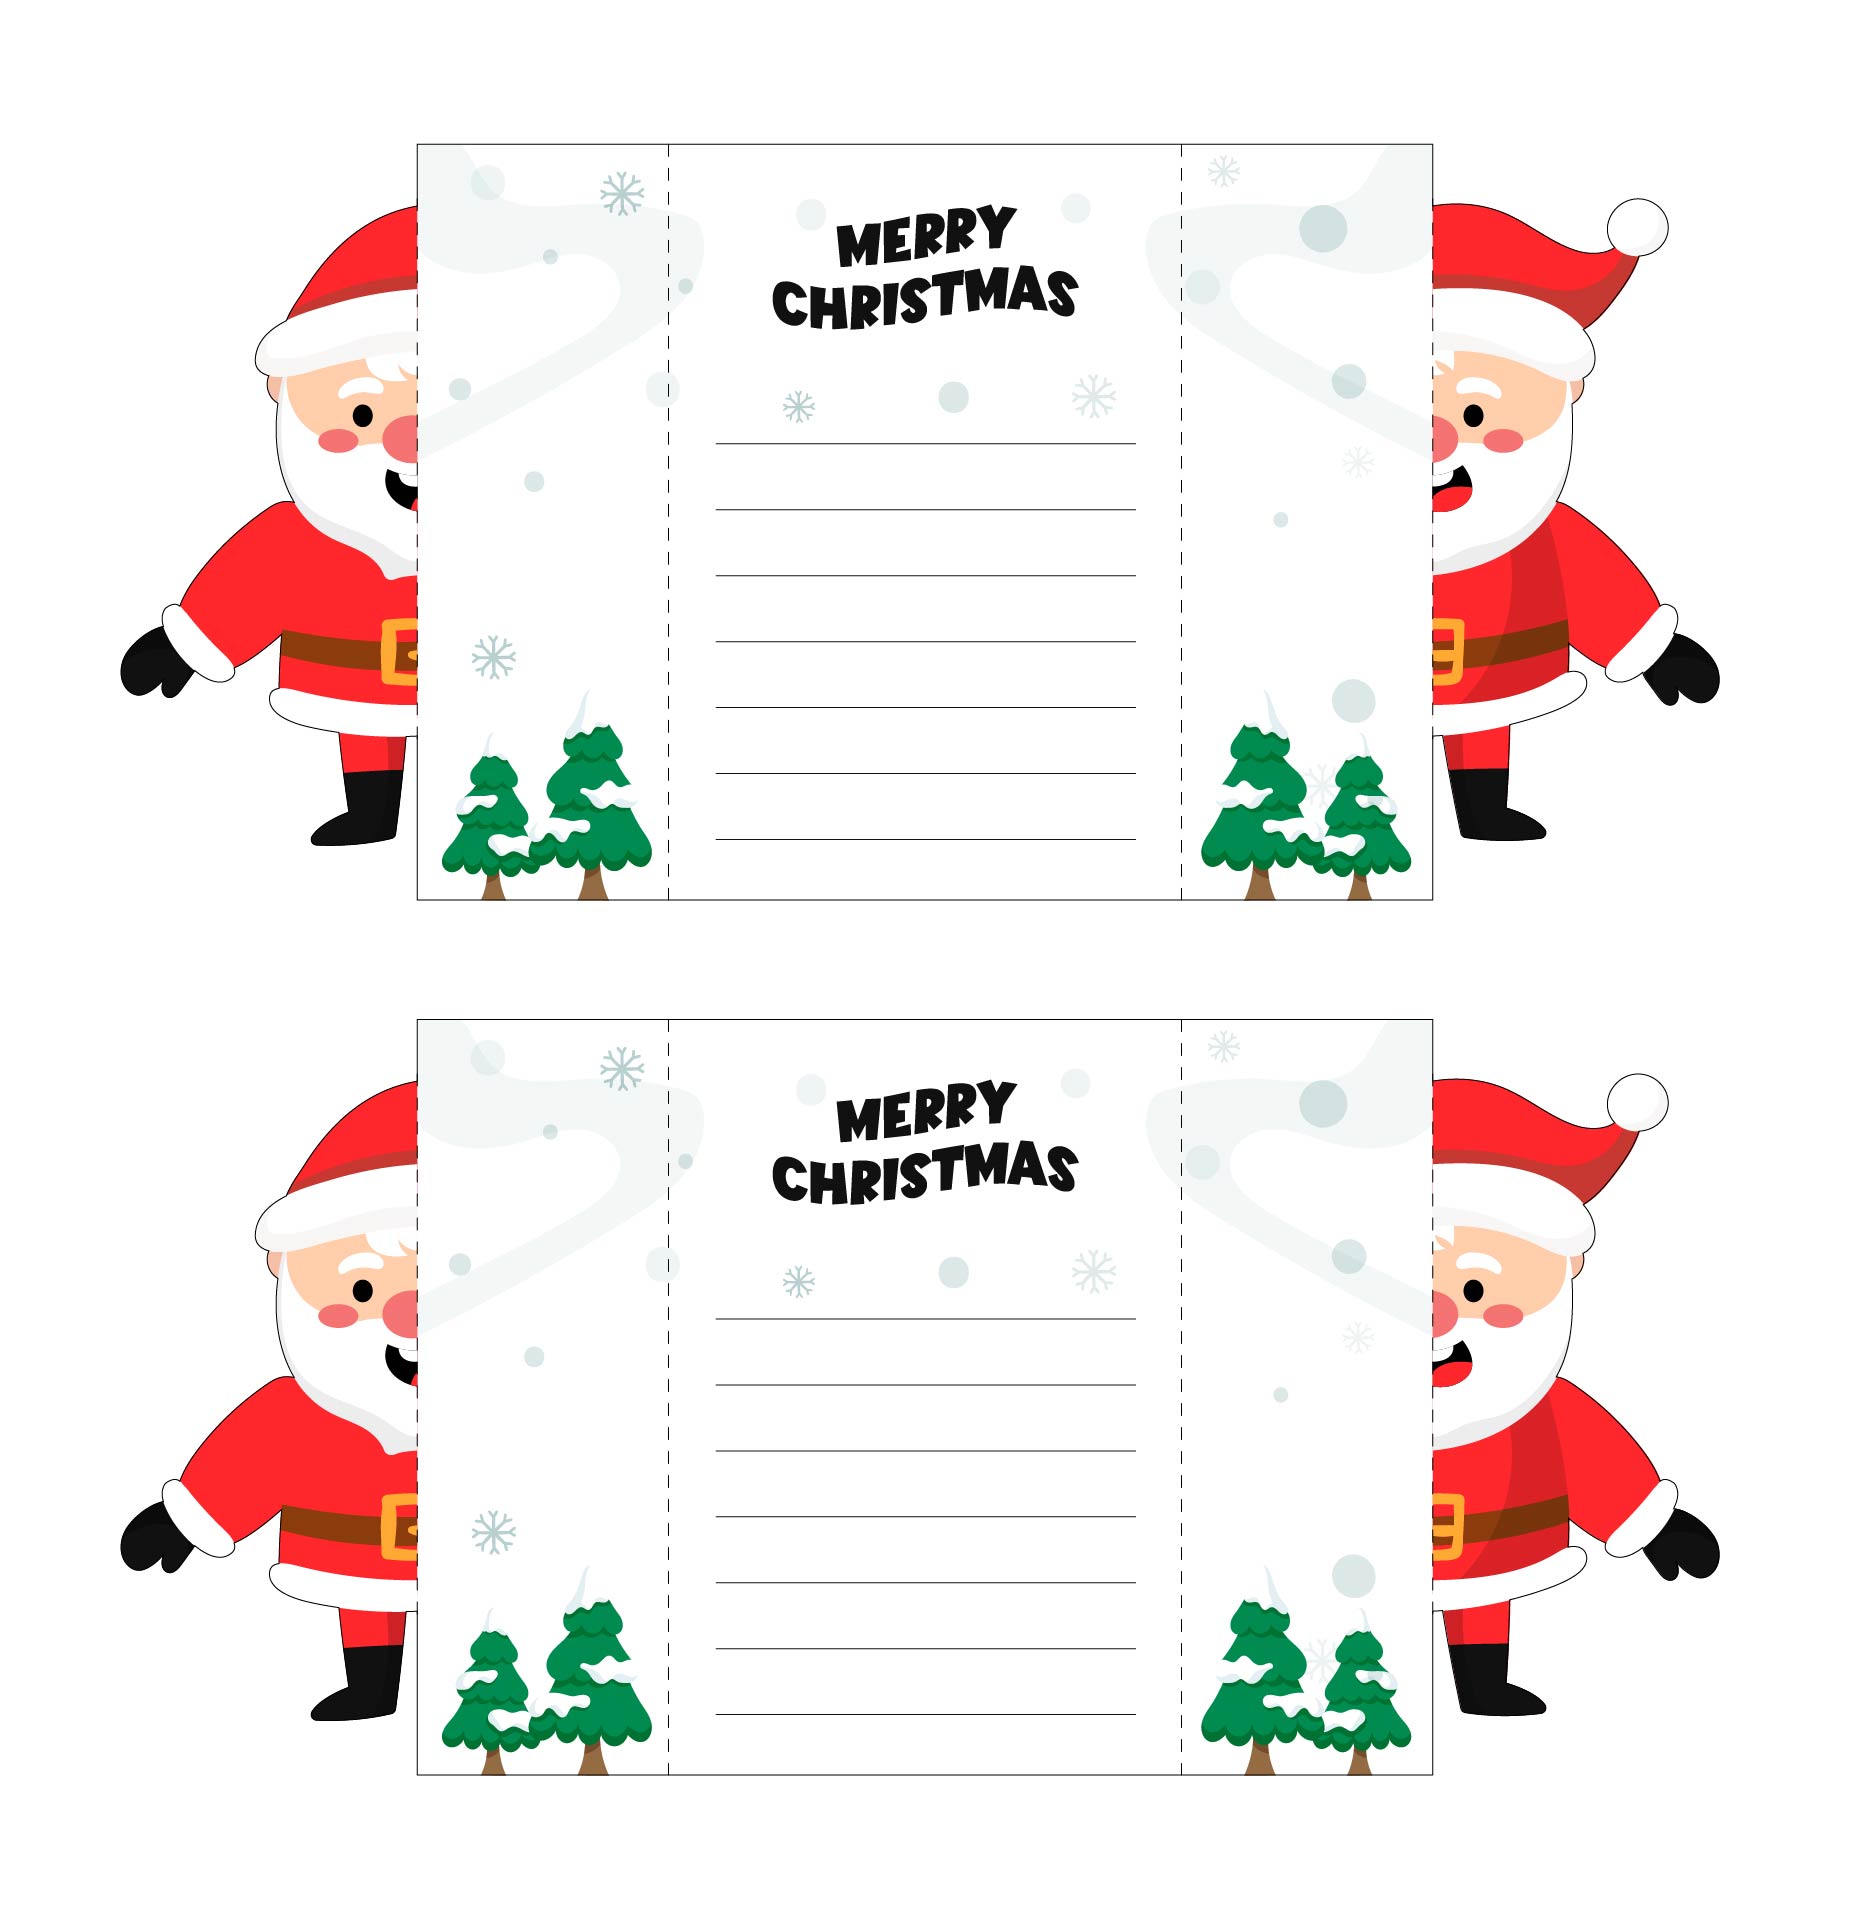 Easy Printable Christmas Crafts And Writing Templates